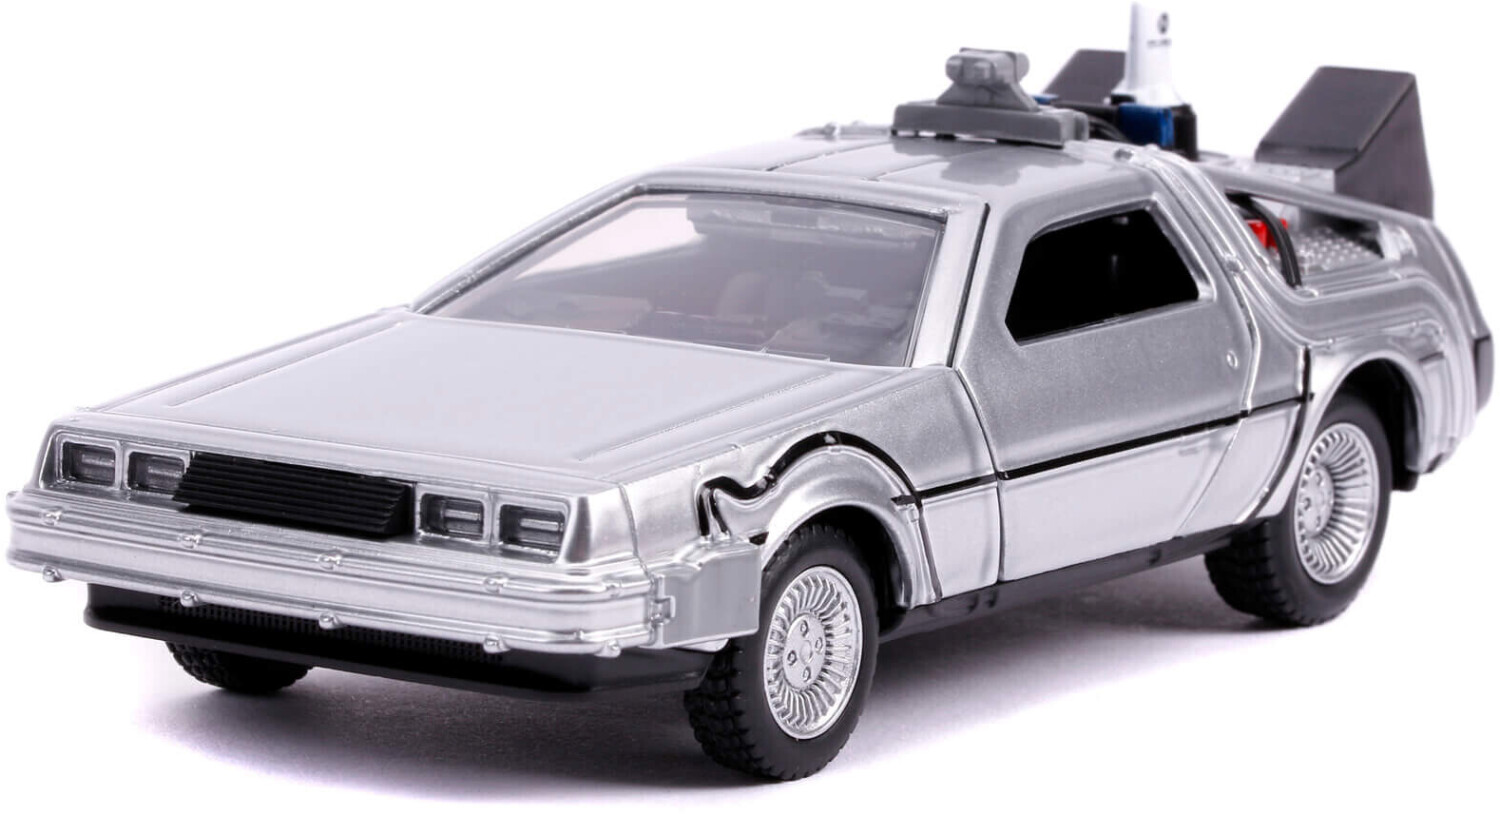 Jada Back to the Future II DeLorean Time Machine 1:32 au meilleur